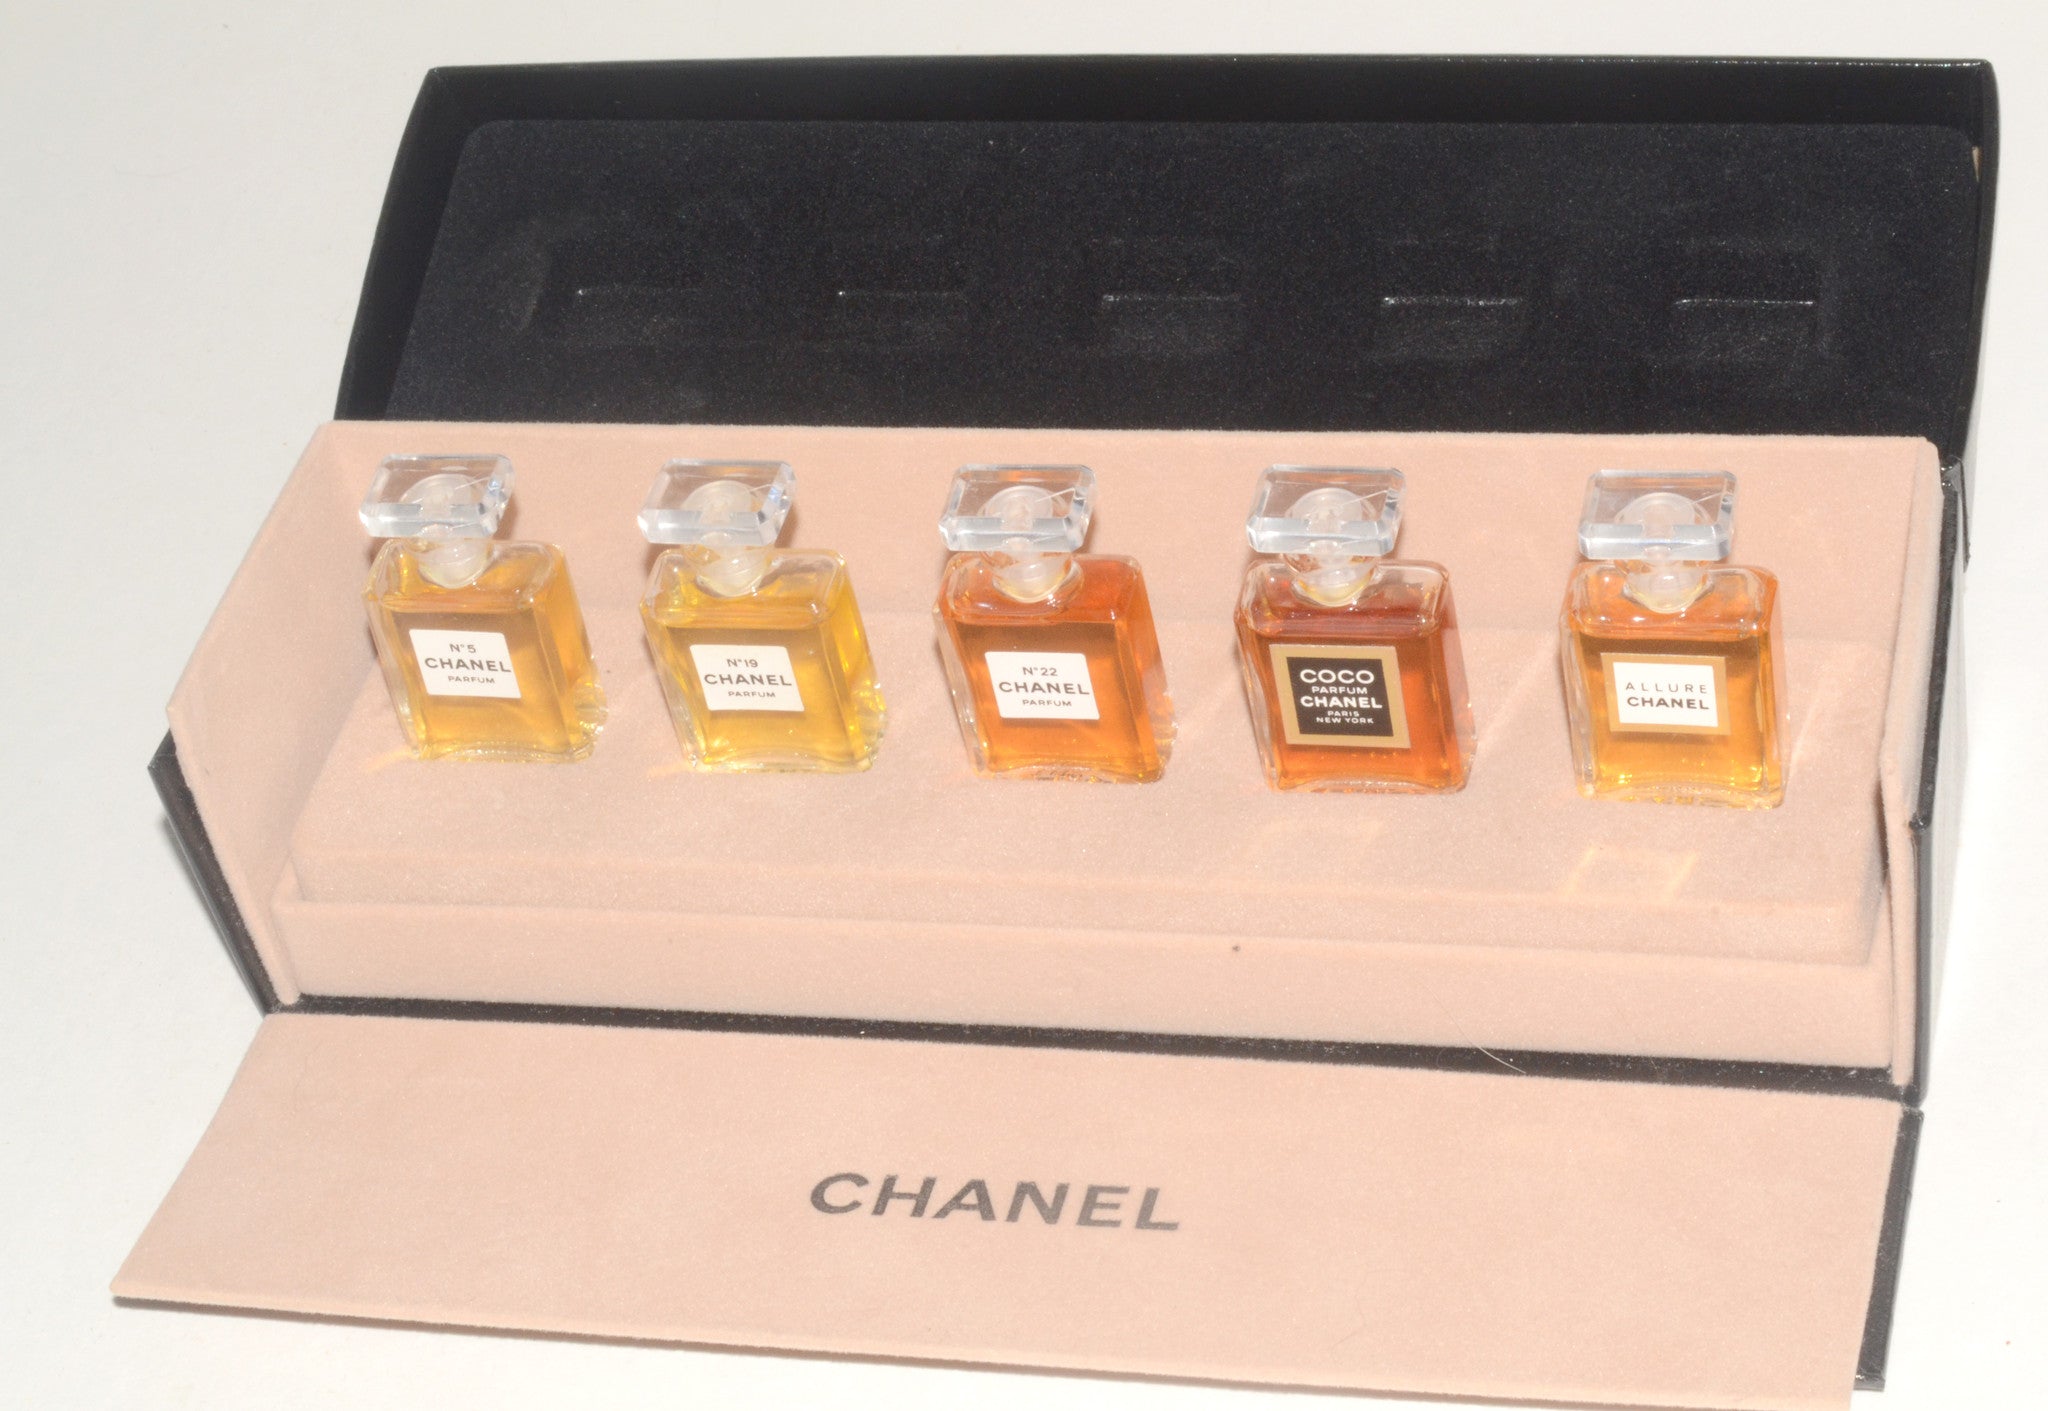 Chanel Mini Perfumes Gift Set #chanel #giftideas #perfume #mini